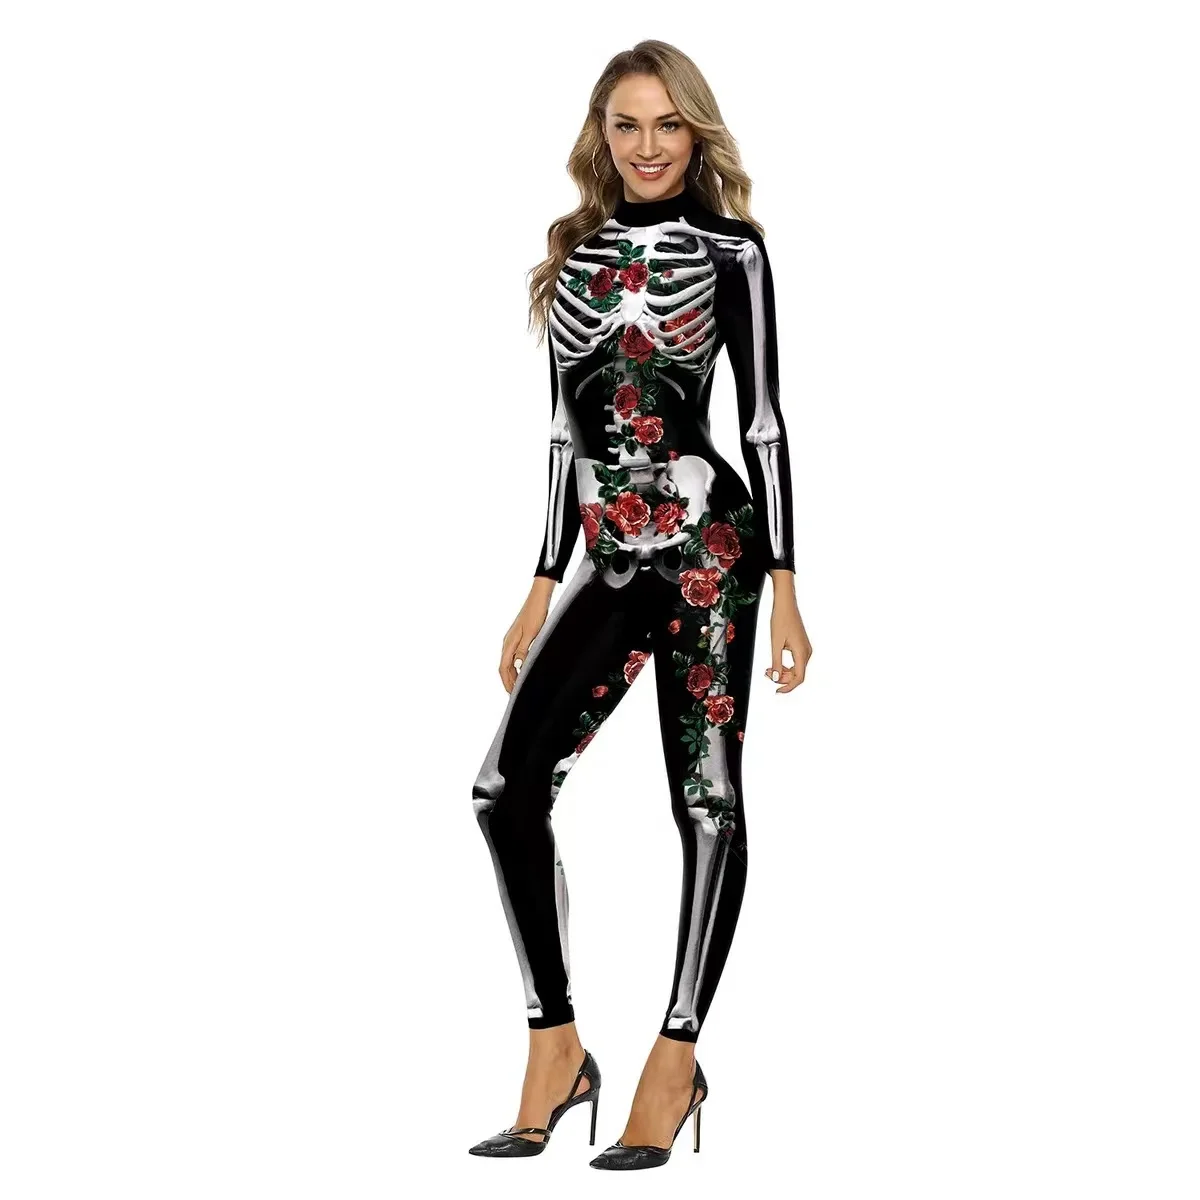 Zawaland Halloween Party Cosplay Costume Women Skeleton 3D Printed ...